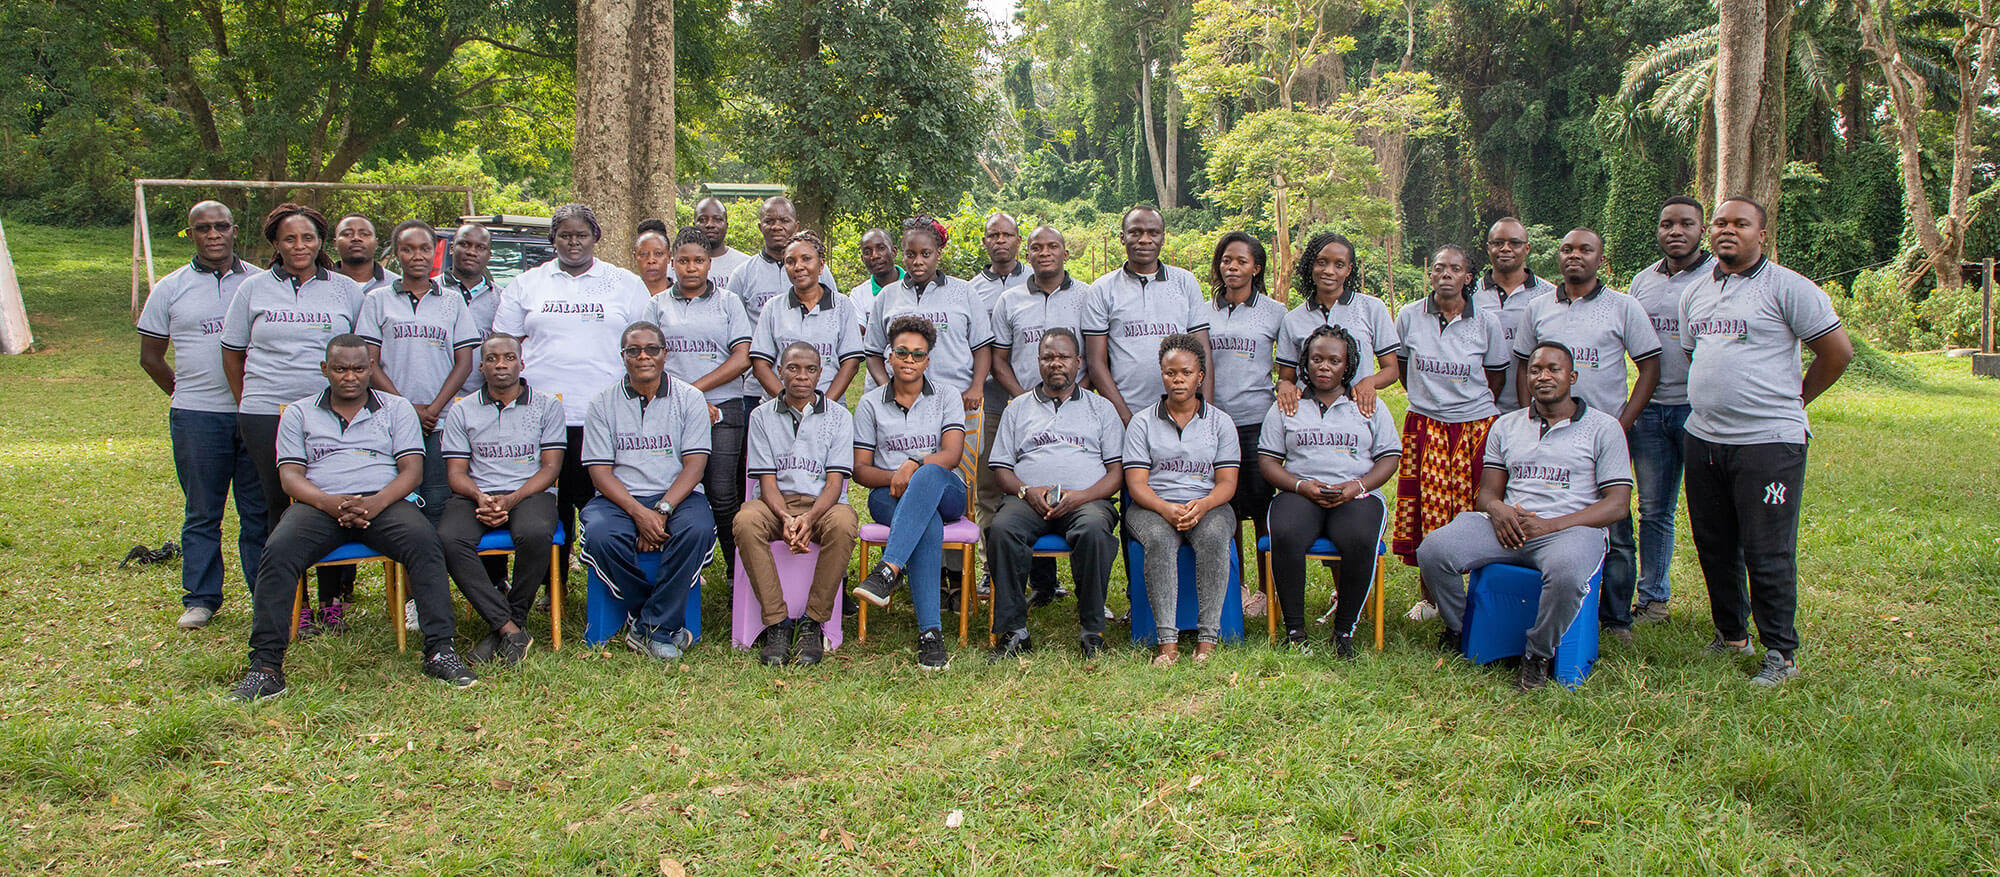 A group photo of the Target Malaria Uganda Team